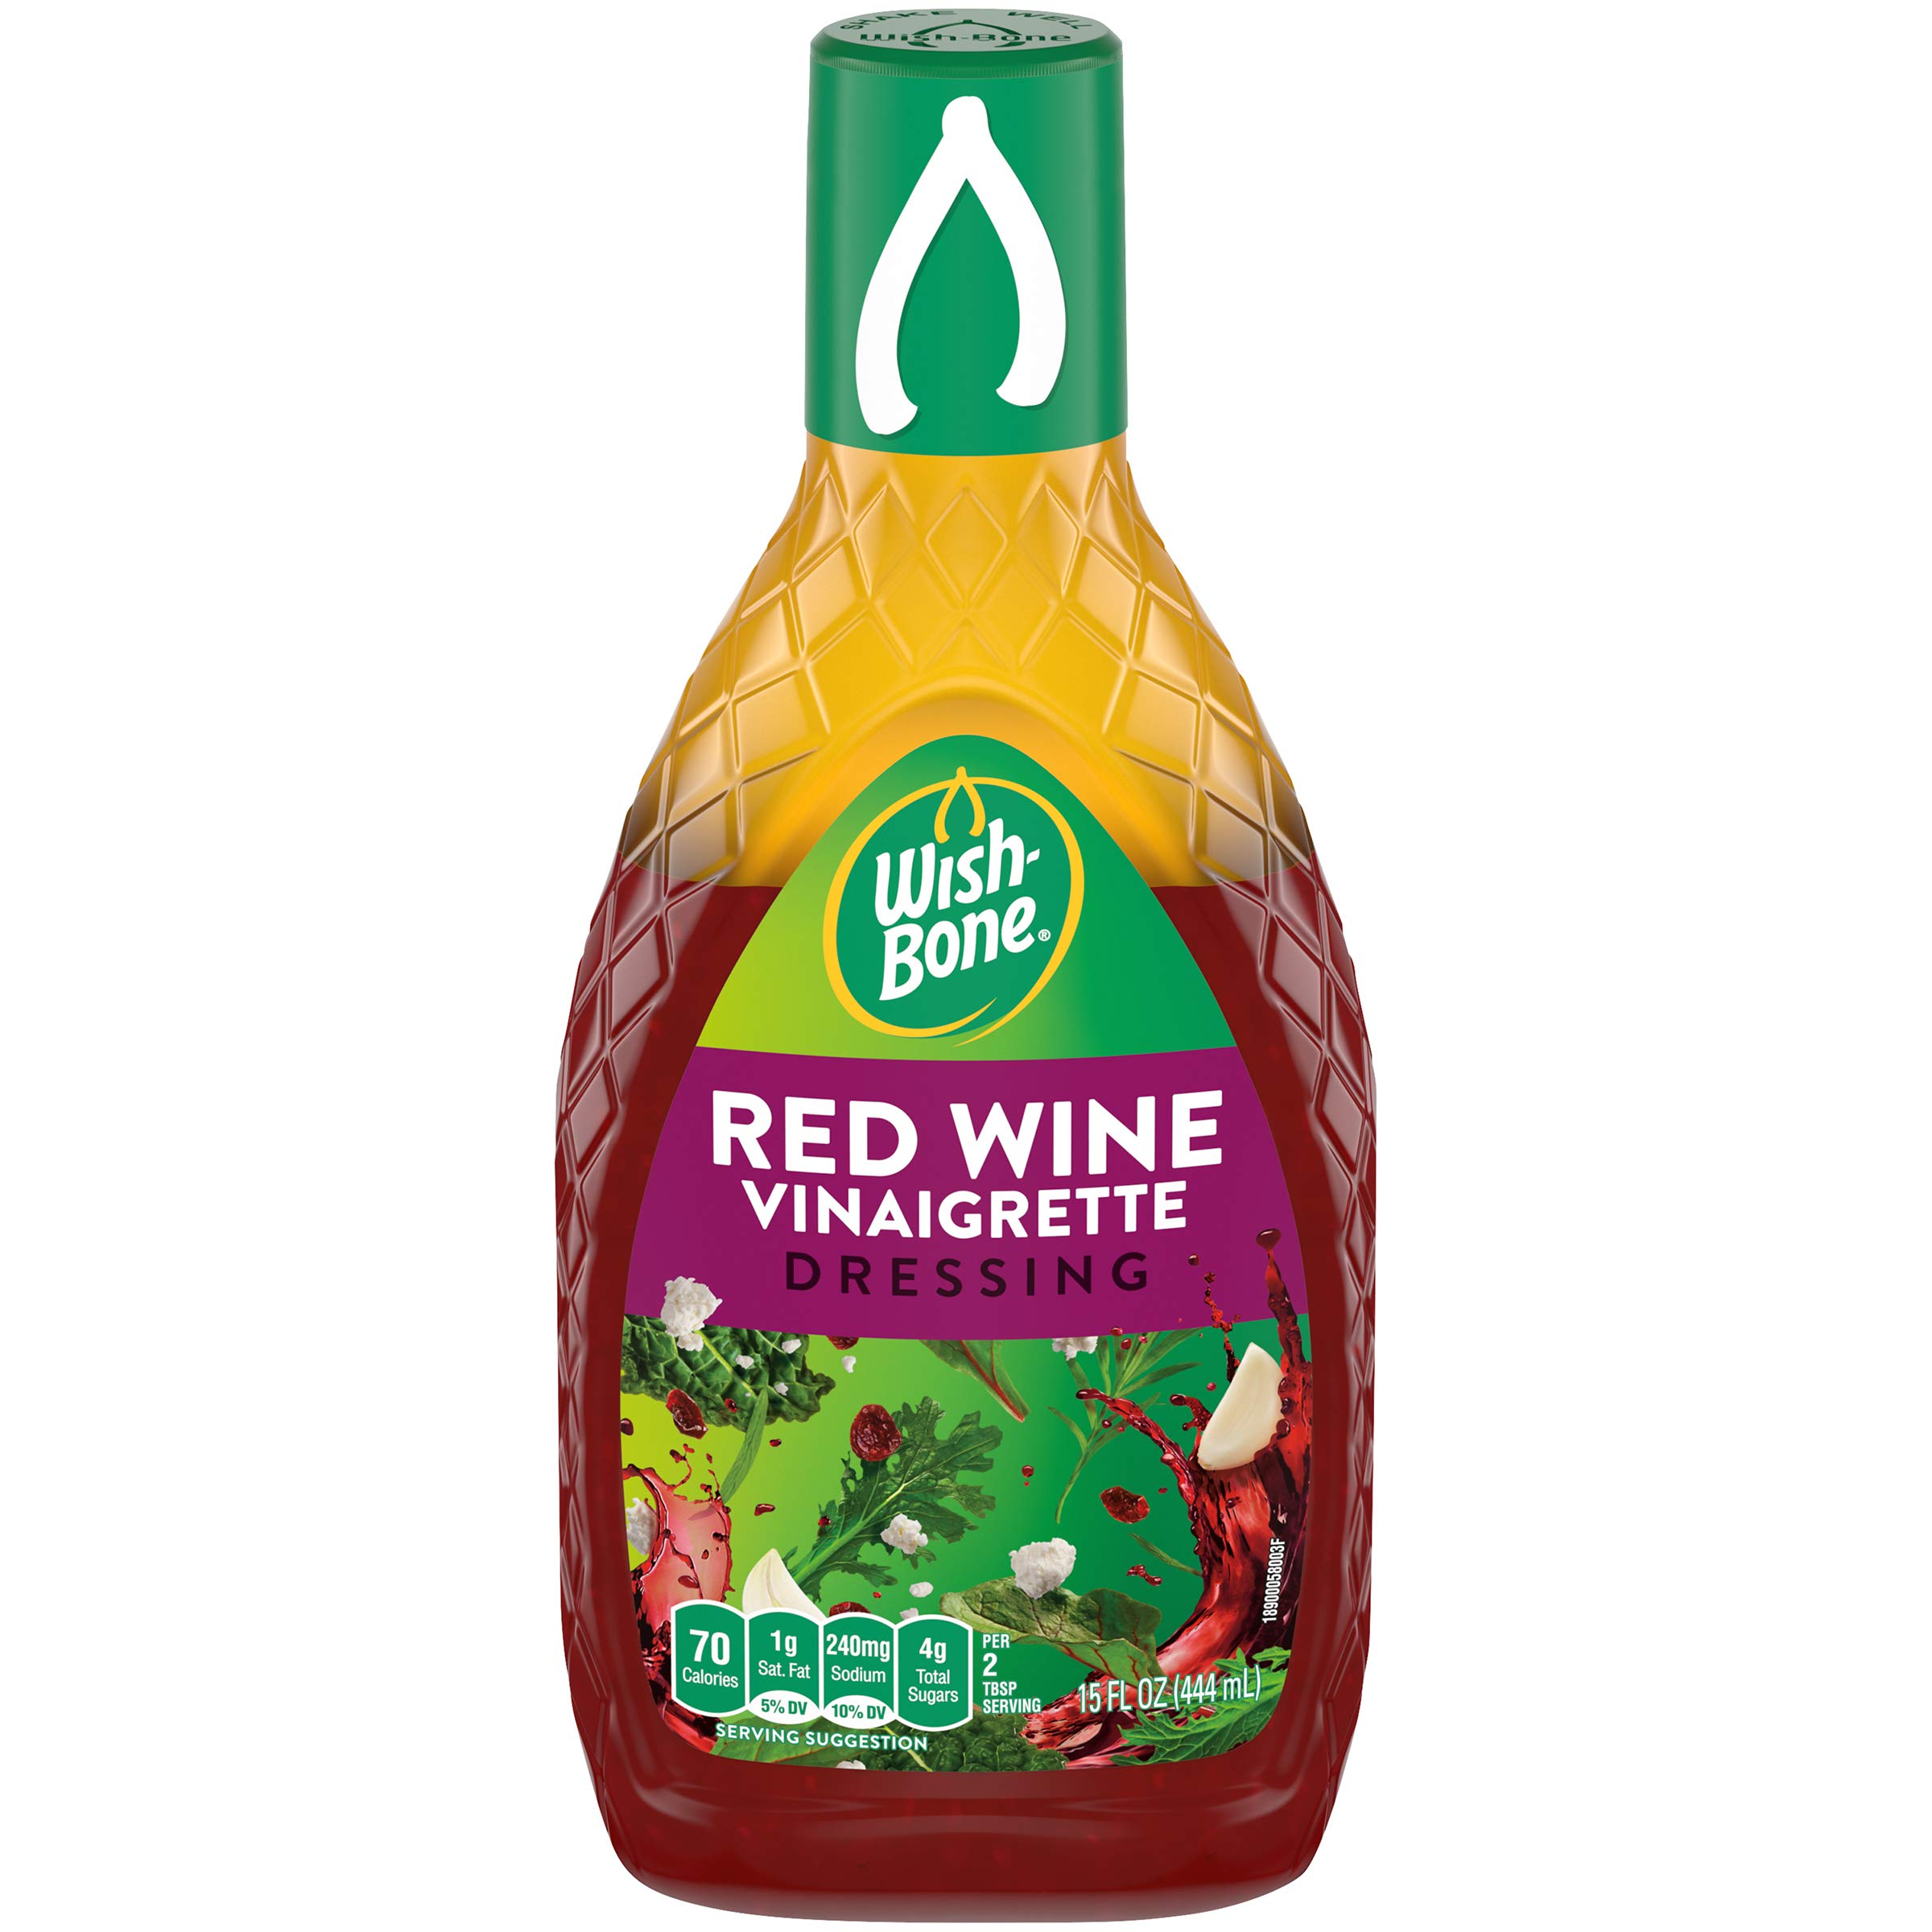 15-Oz Wish-Bone Red Wine Vinaigrette Dressing $1.87 w/ S&S + Free Shipping w/ Prime or on $35+